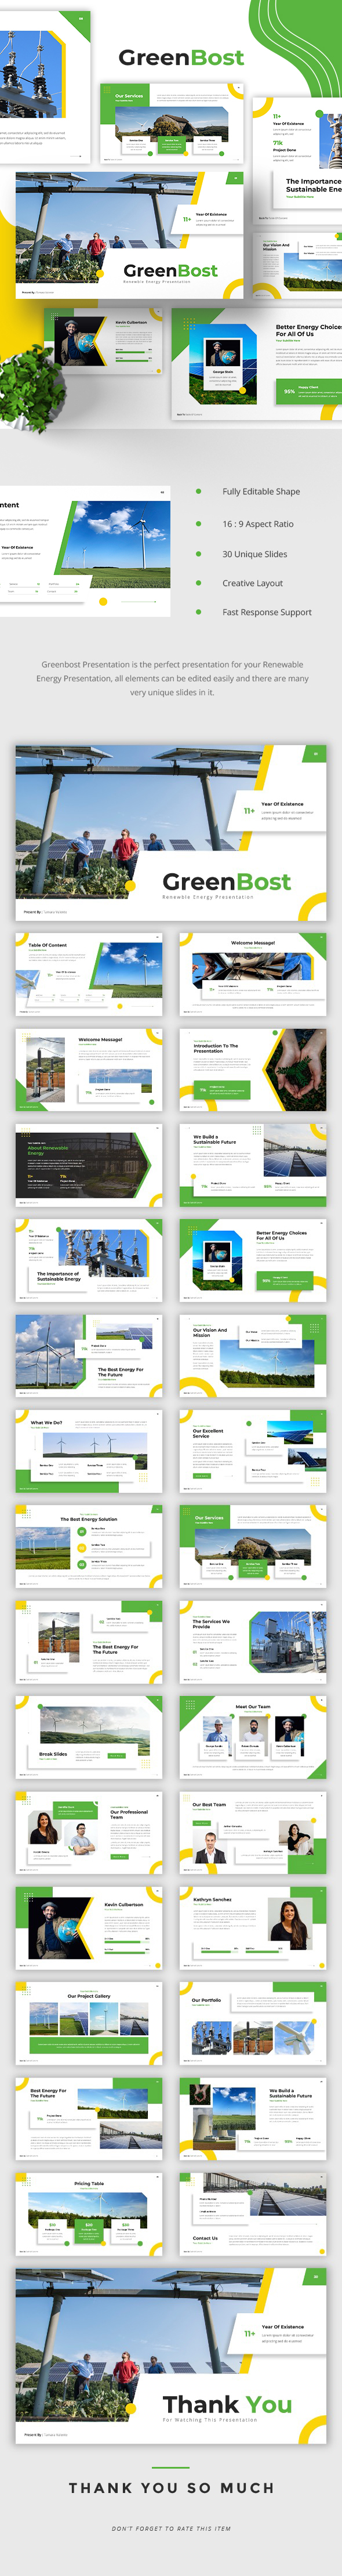 GreenBost - Renewable Energy Profile PowerPoint